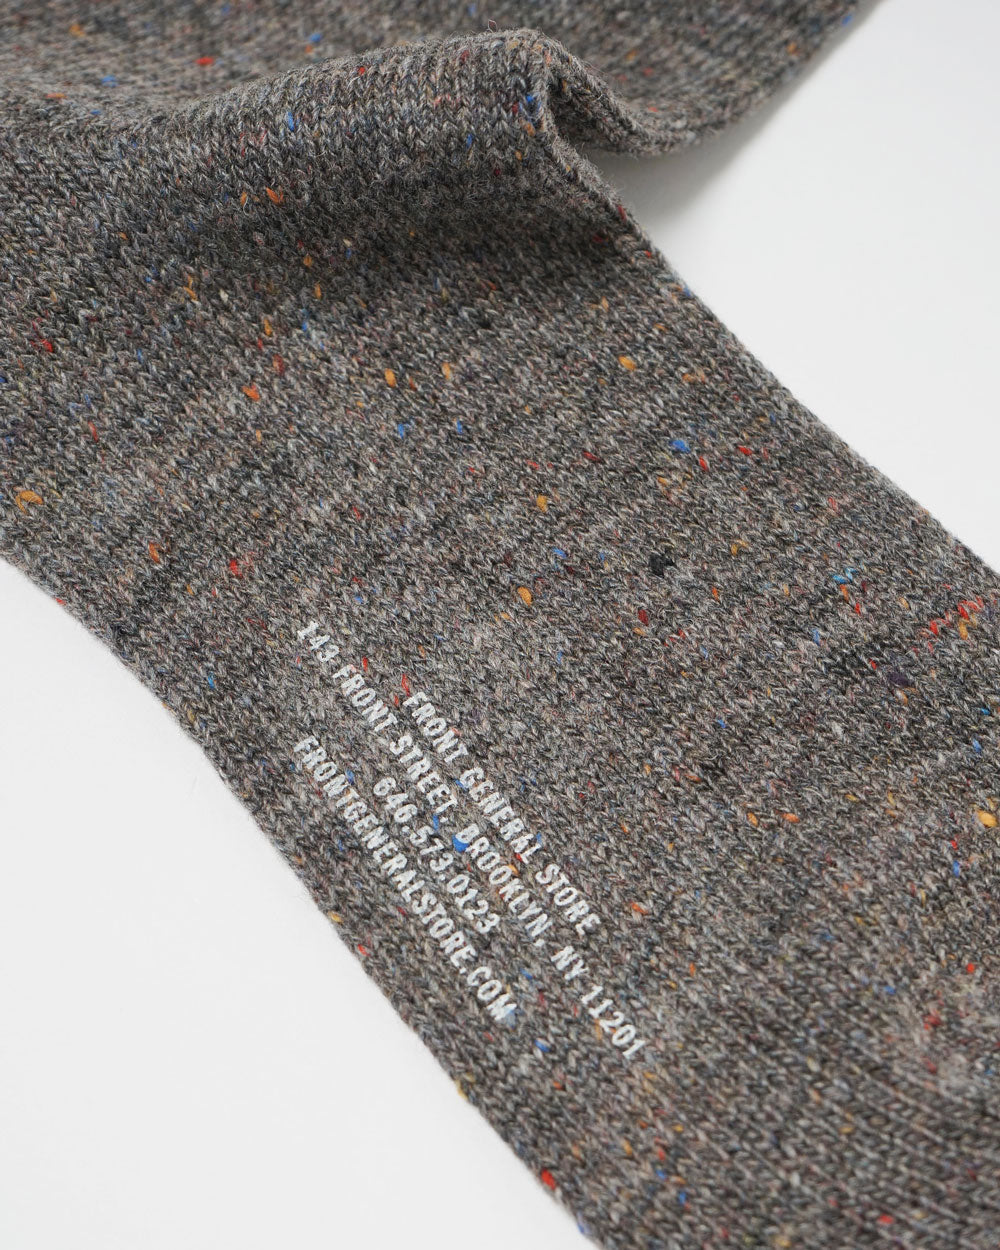 Wool Nep Socks / Gray